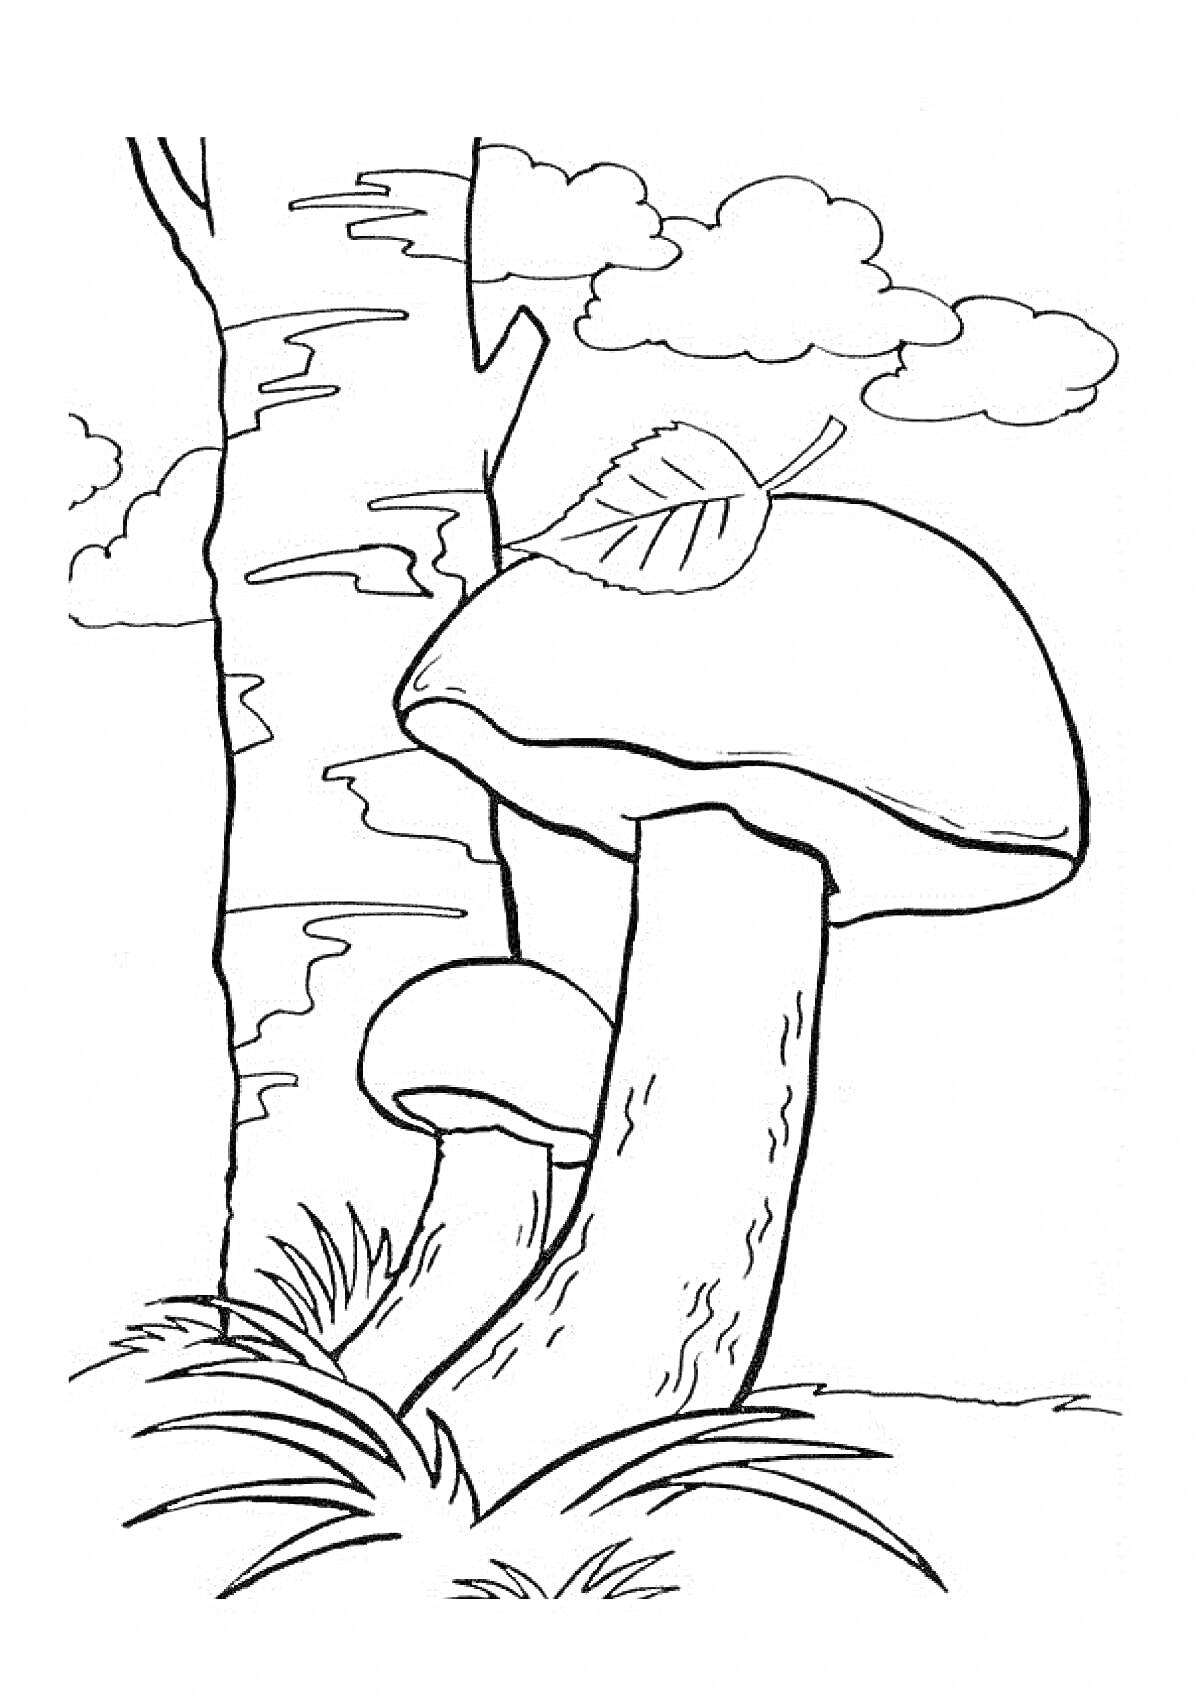 Береза, грибы, трава, облака и лист